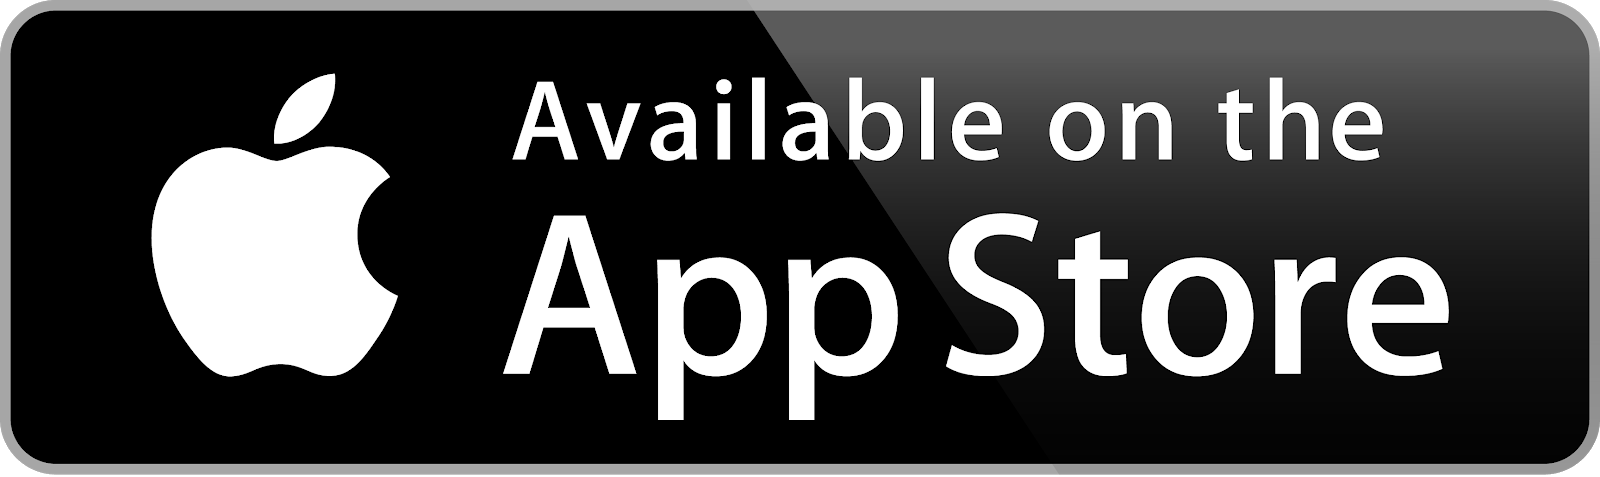 gracetoday 1000 bible promises app store